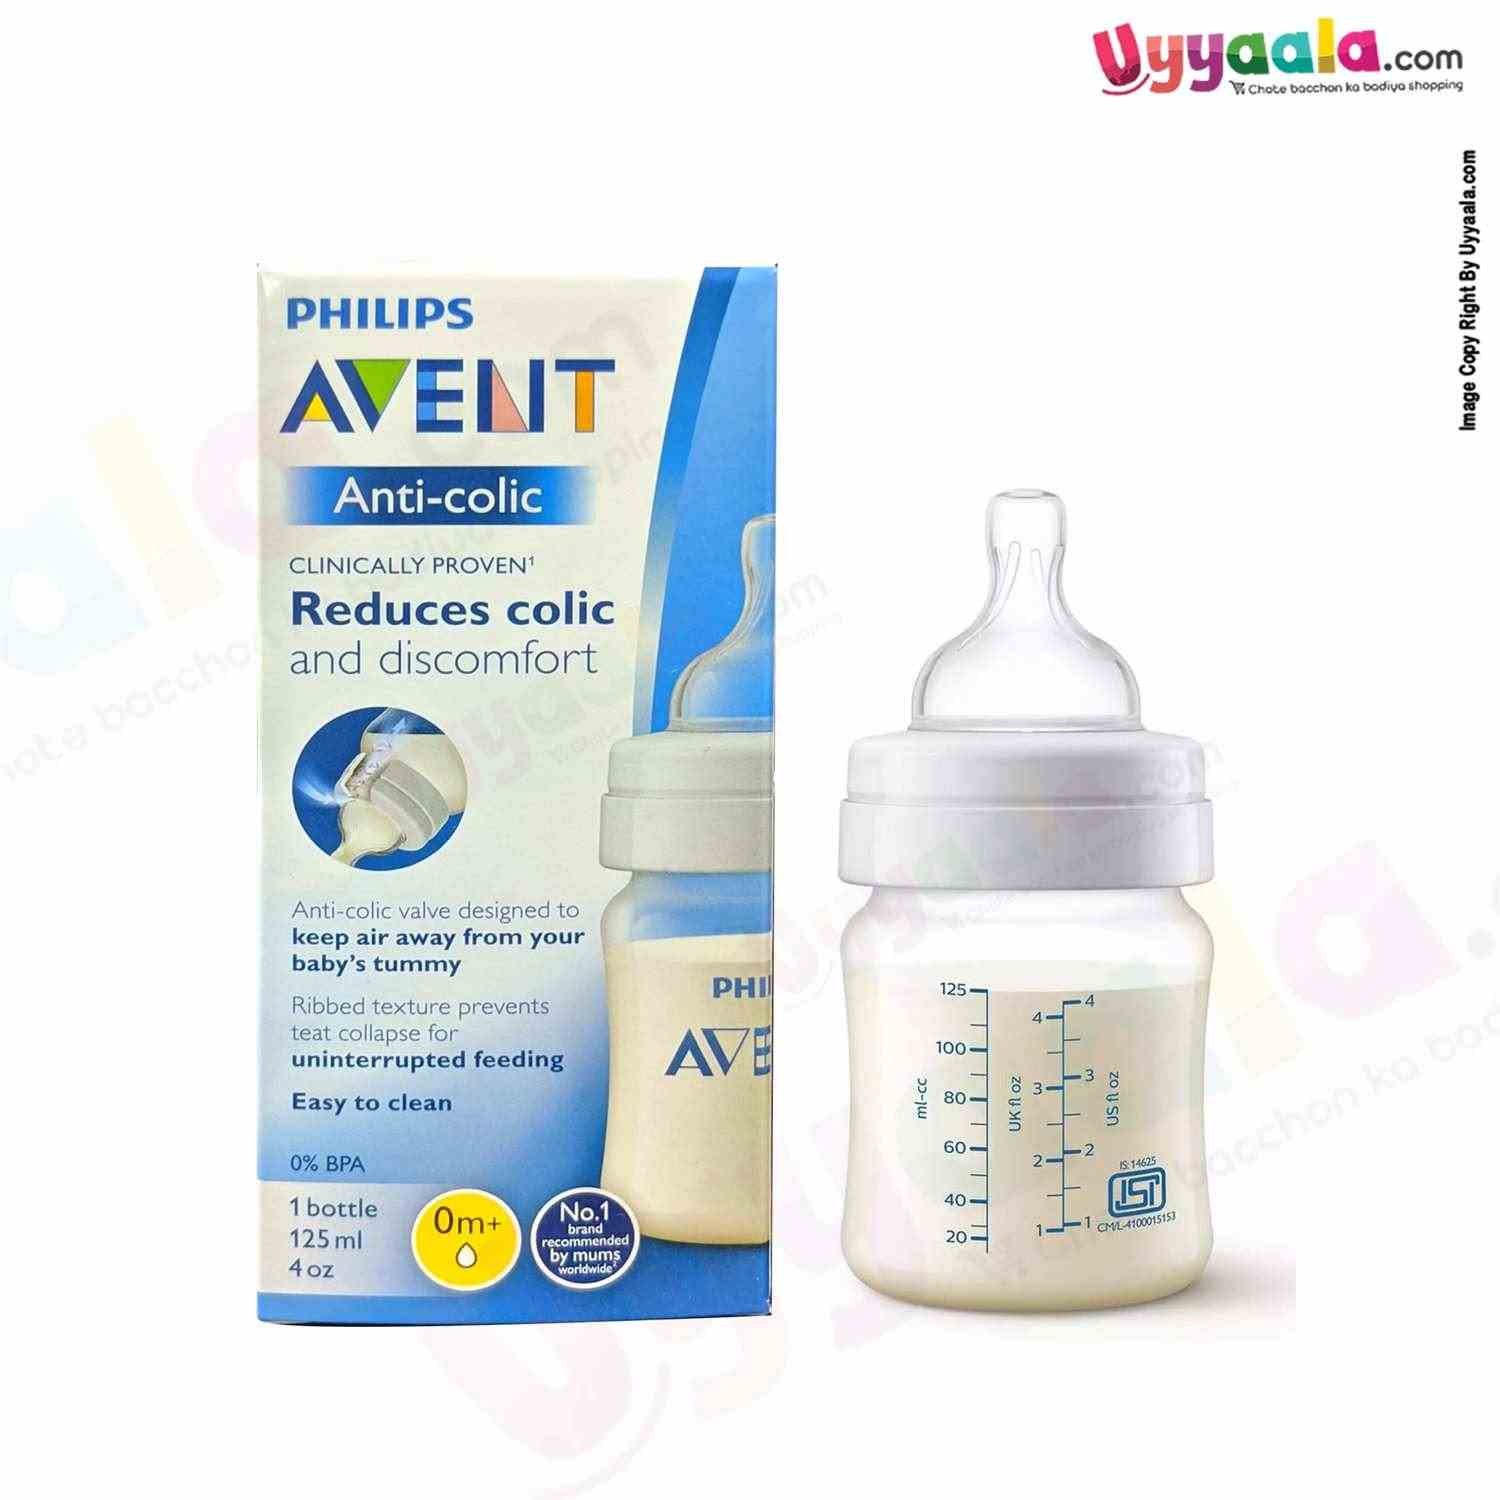 PHILIPS AVENT Anti-colic baby feeding bottle -125ml, 0+m